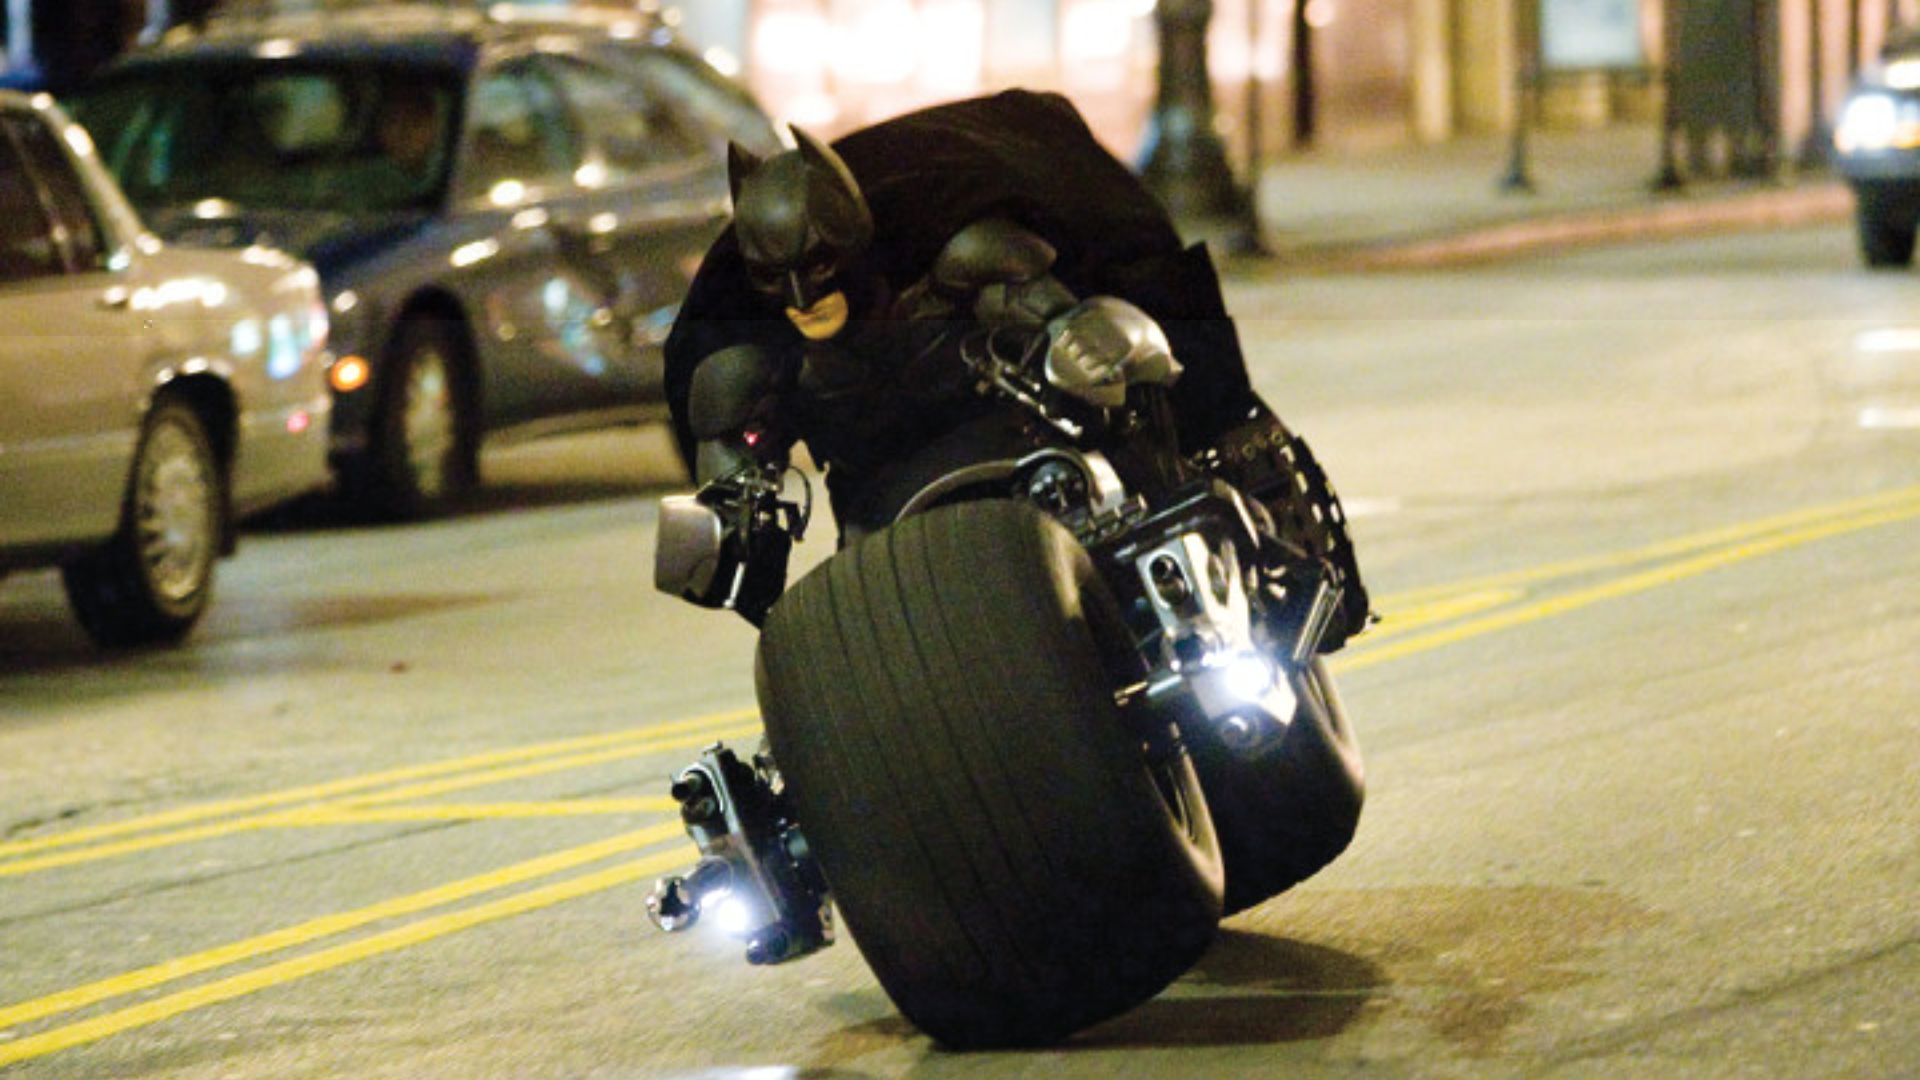 The Batman' Takes Home the Best Superhero Award at IMDb! - DC UPDATES